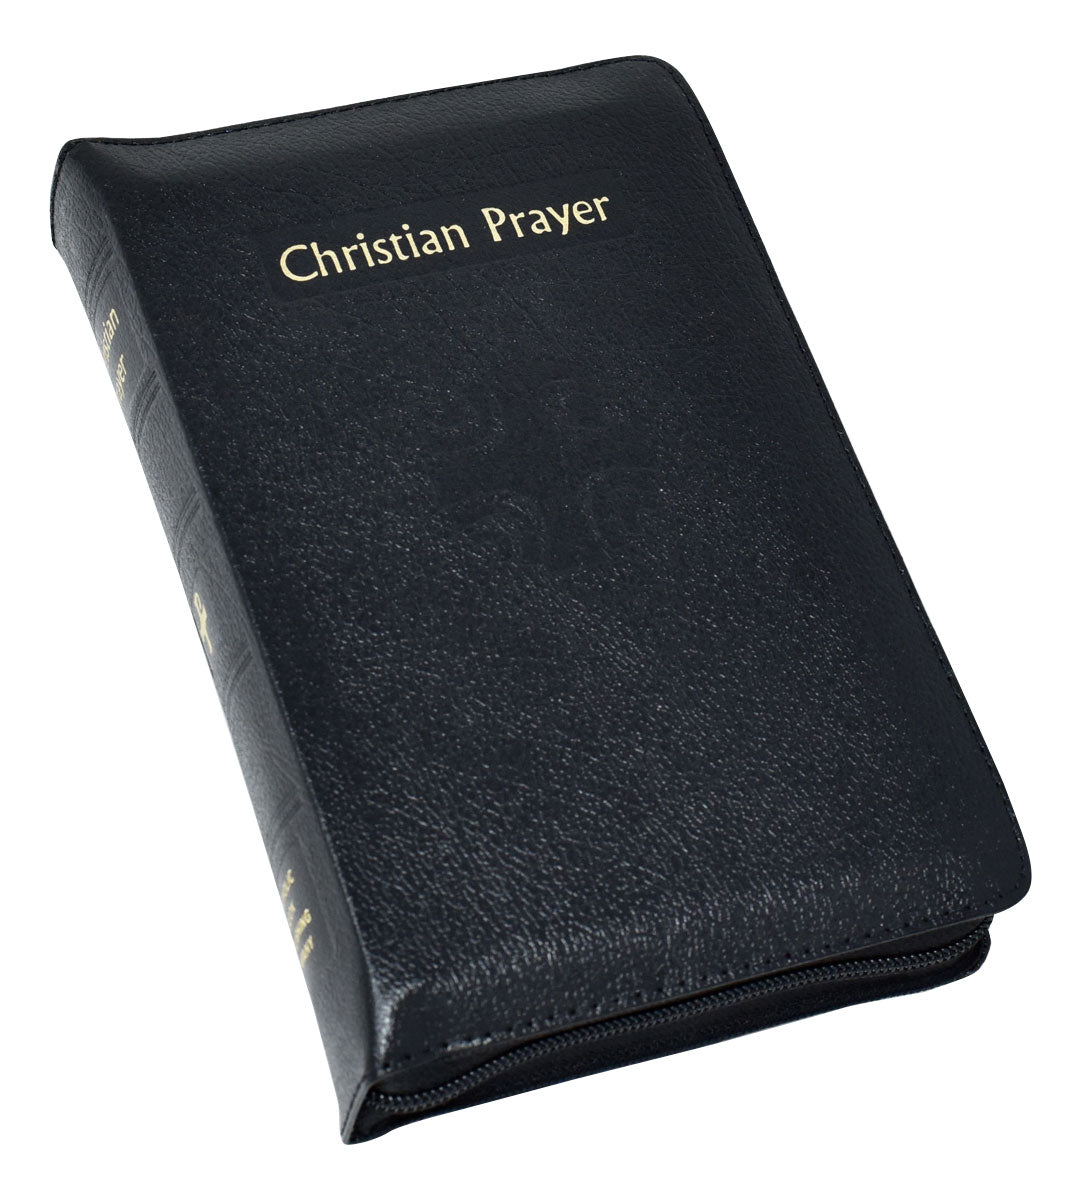 Christian Prayer (Black Leather)